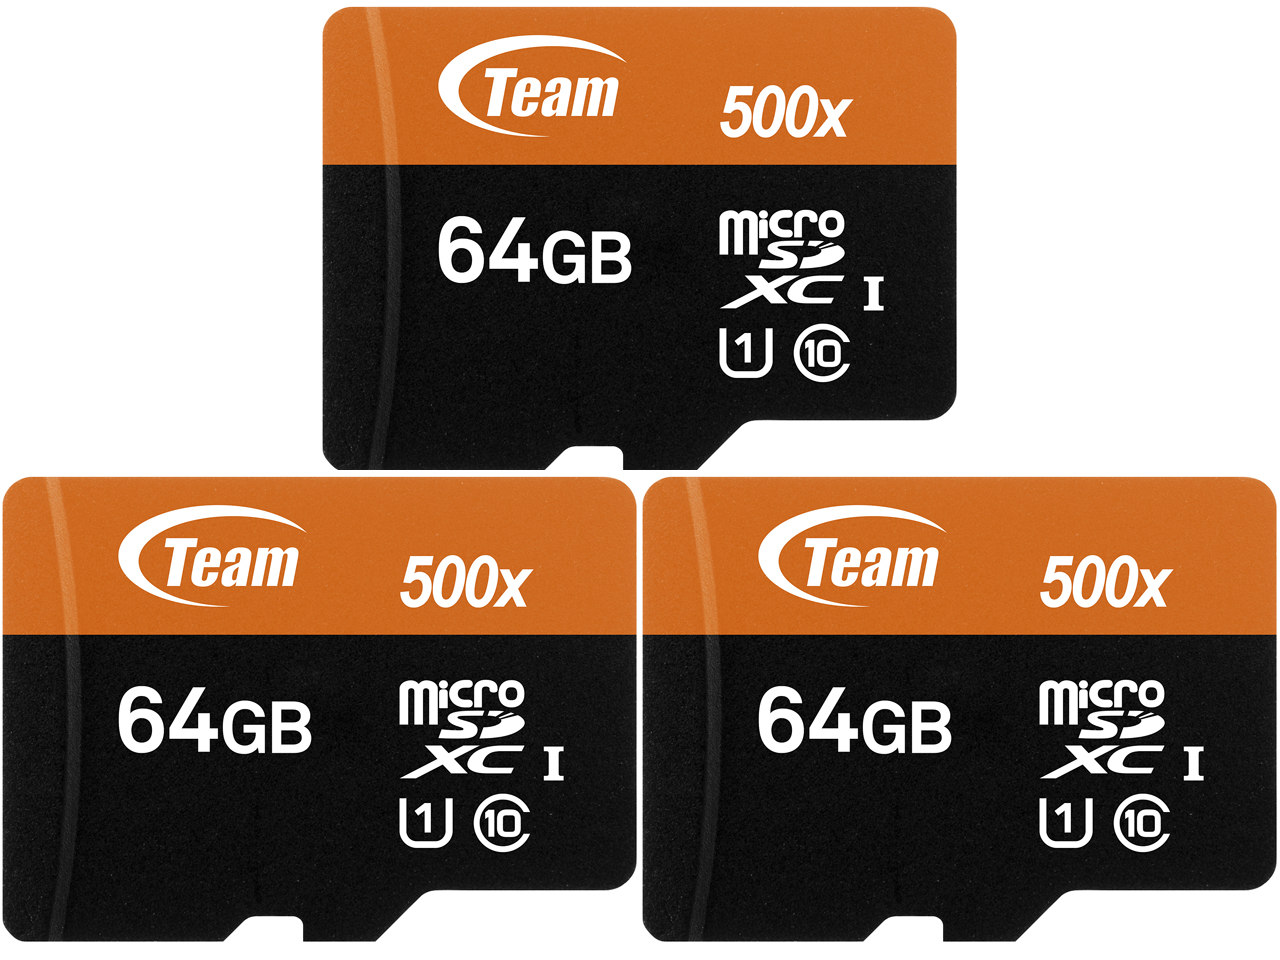 3-Pack 64GB Team MicroSDXC UHS-I/U1 Class 10 Memory Cards w/ Adapter $10.49 + Free Shipping